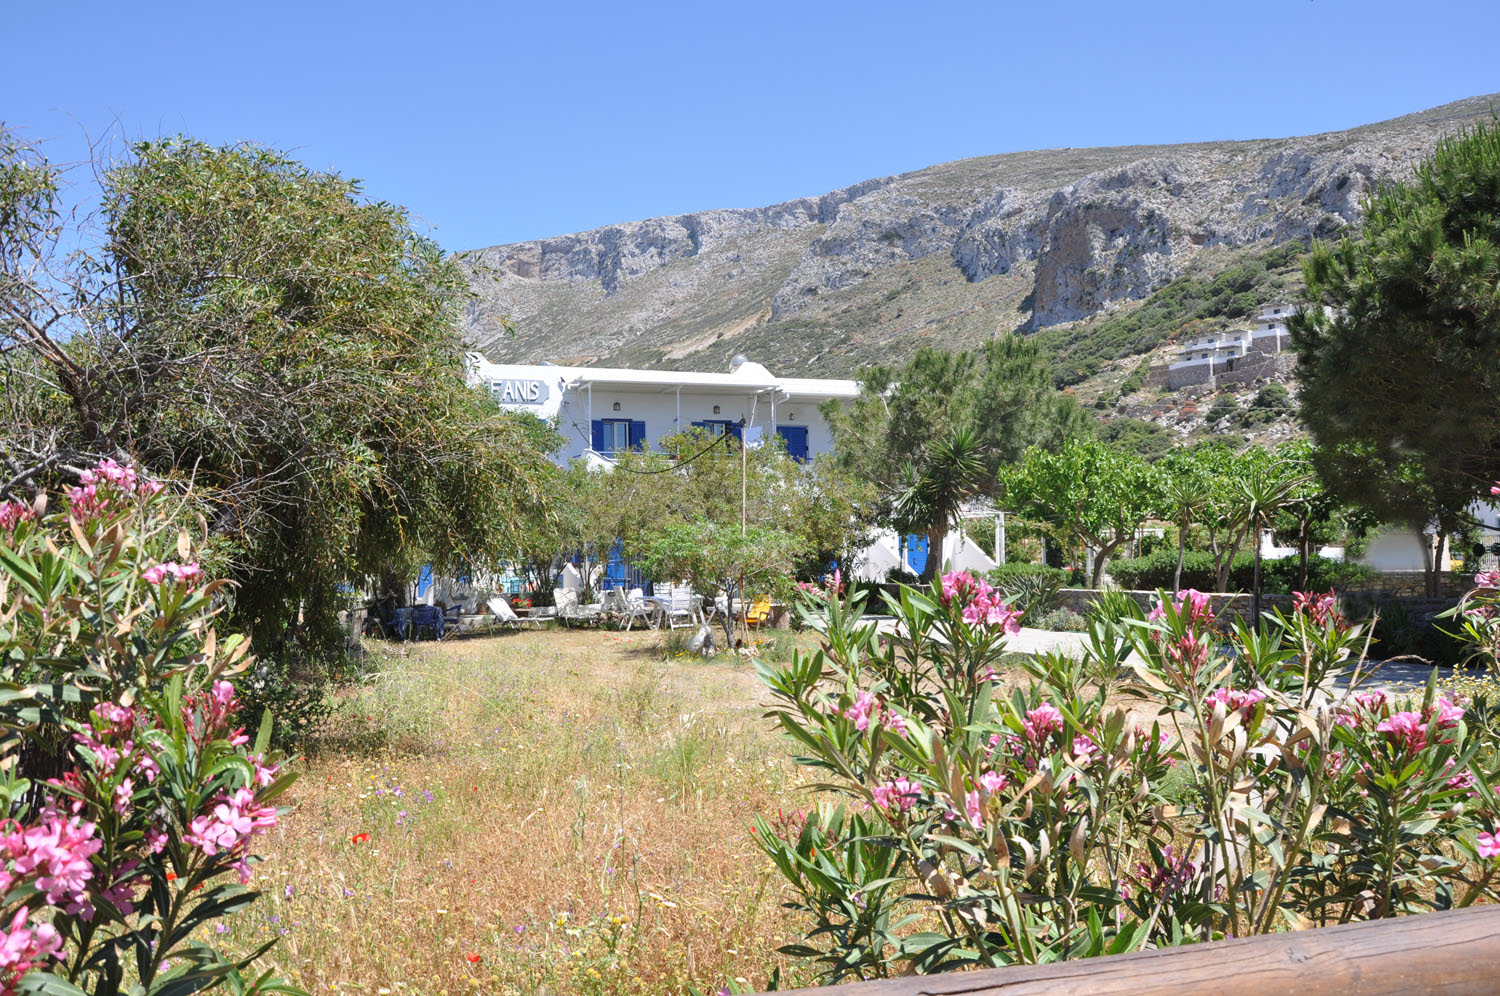 Fanis Studios and Rooms Amorgos Cyclades Greece